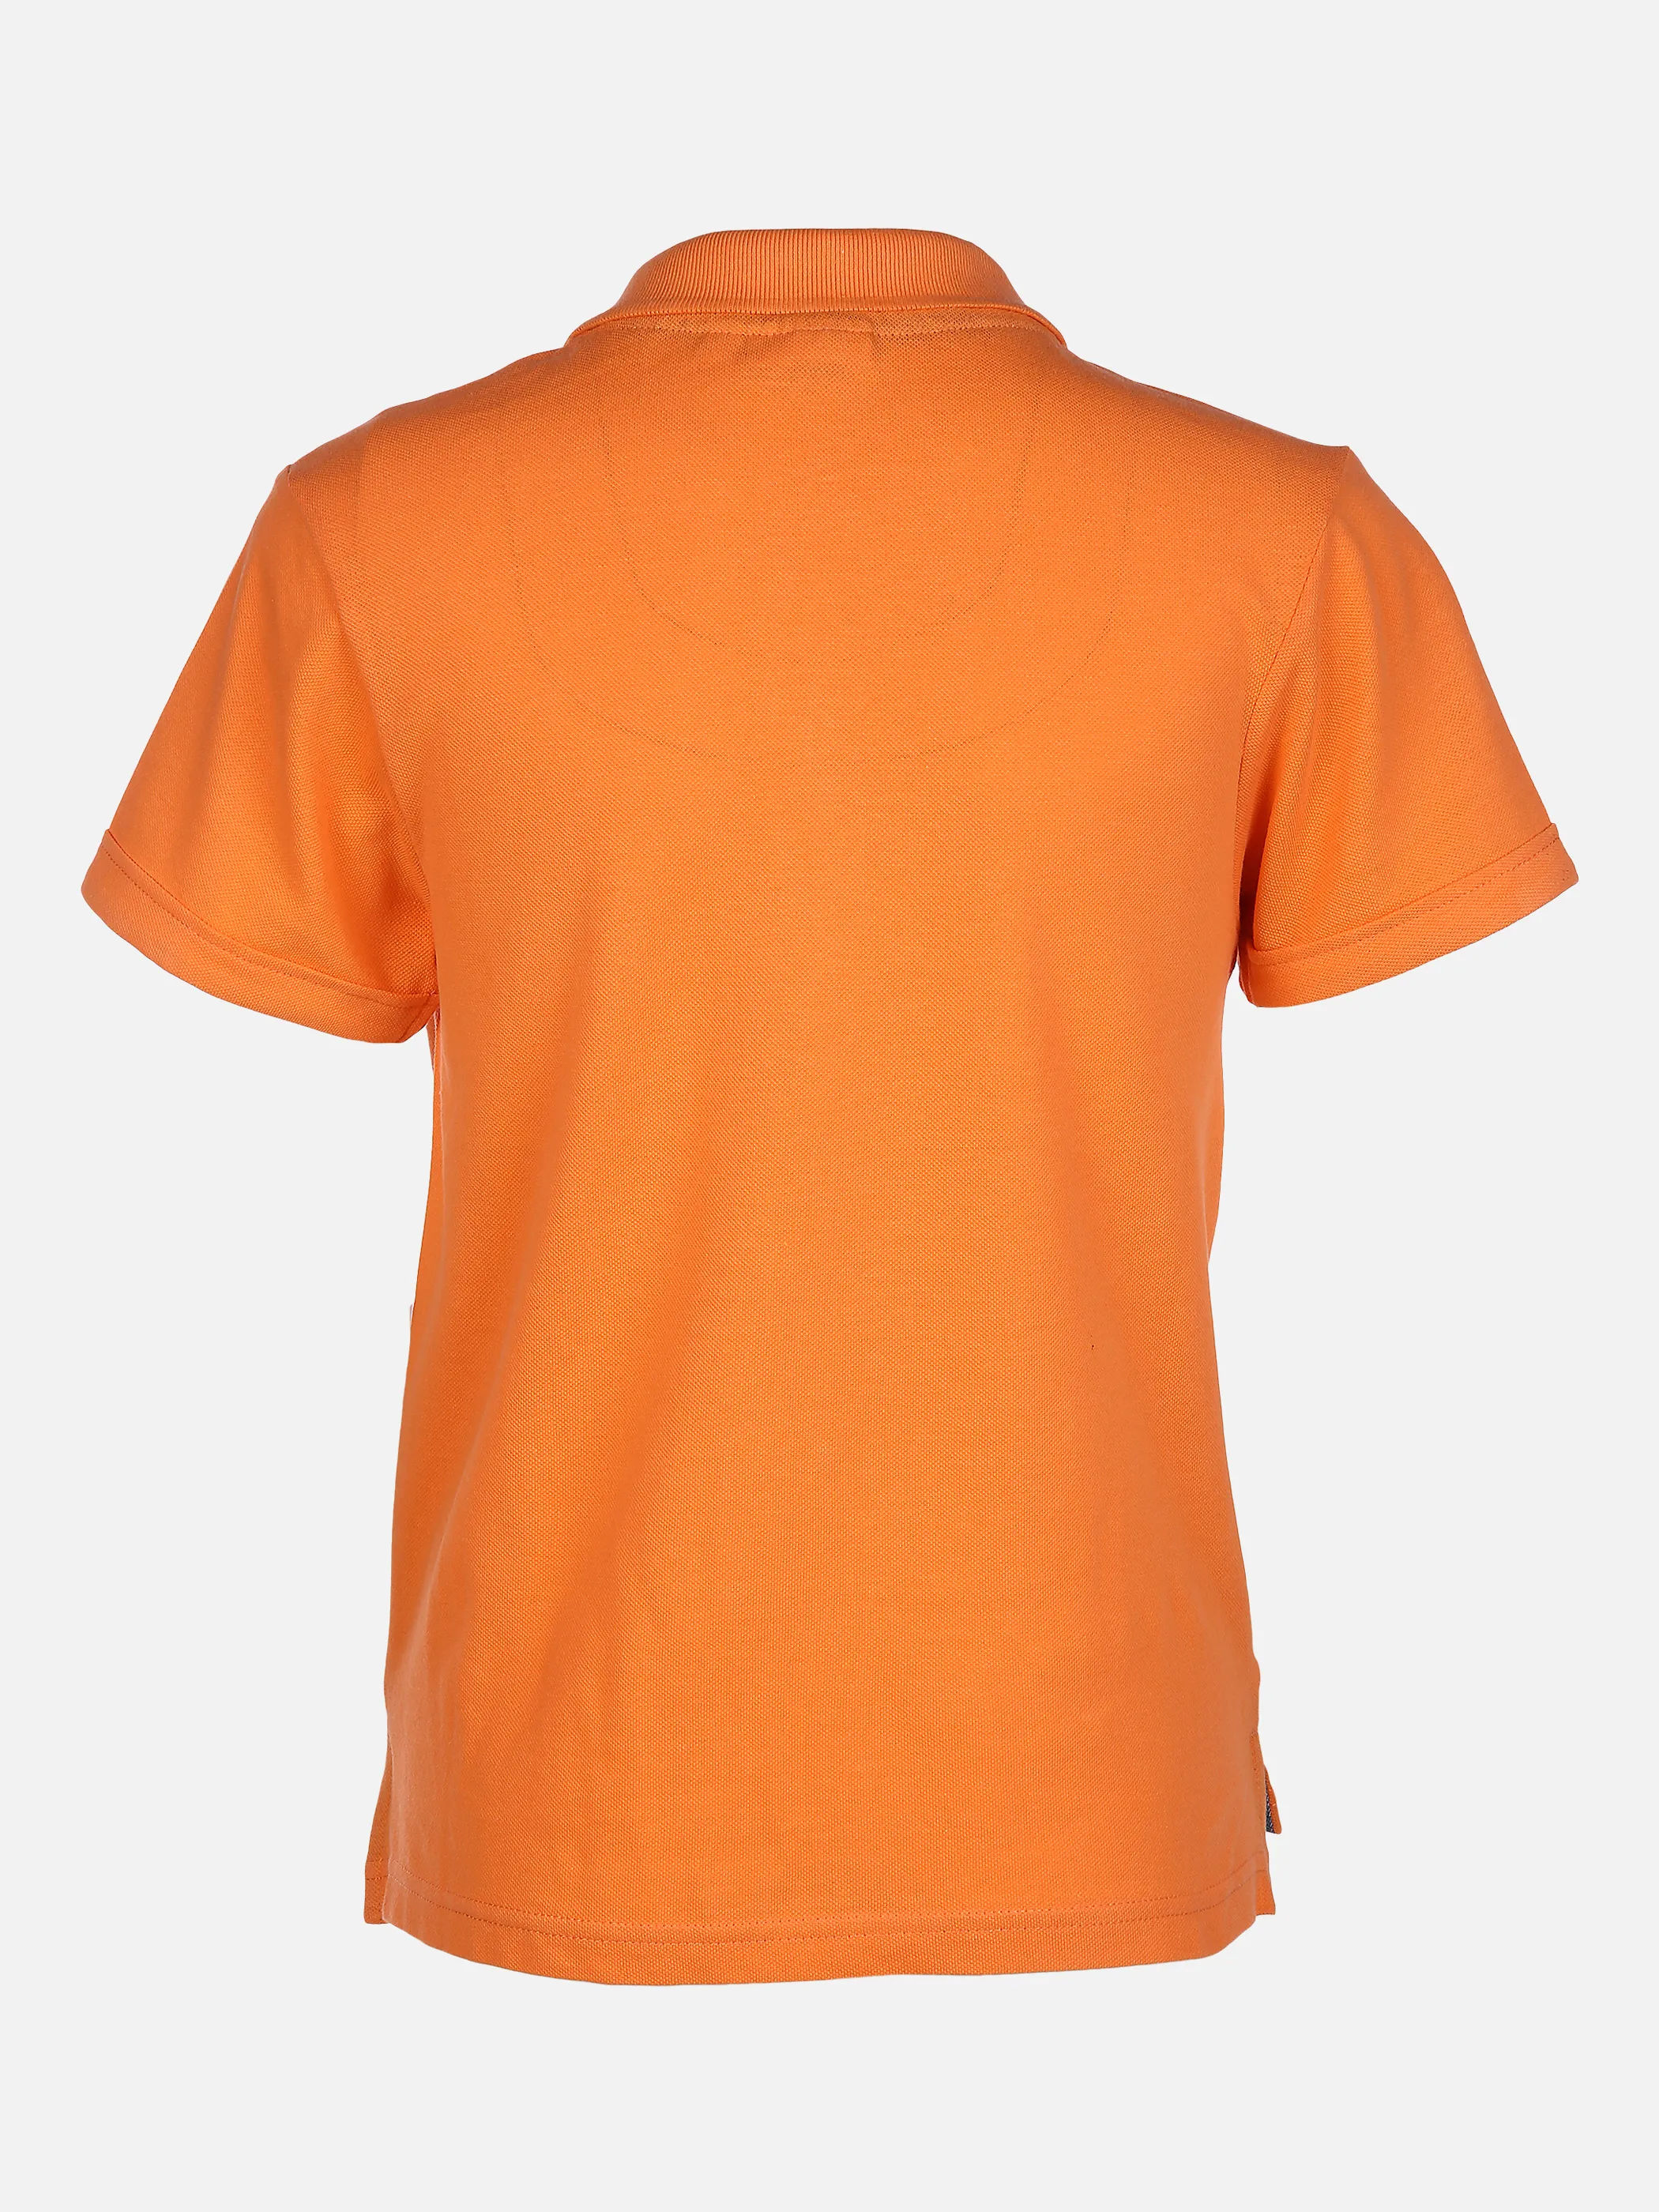 Stop + Go TB Poloshirt 1/4 Arm in orange Orange 851642 ORANGE 2